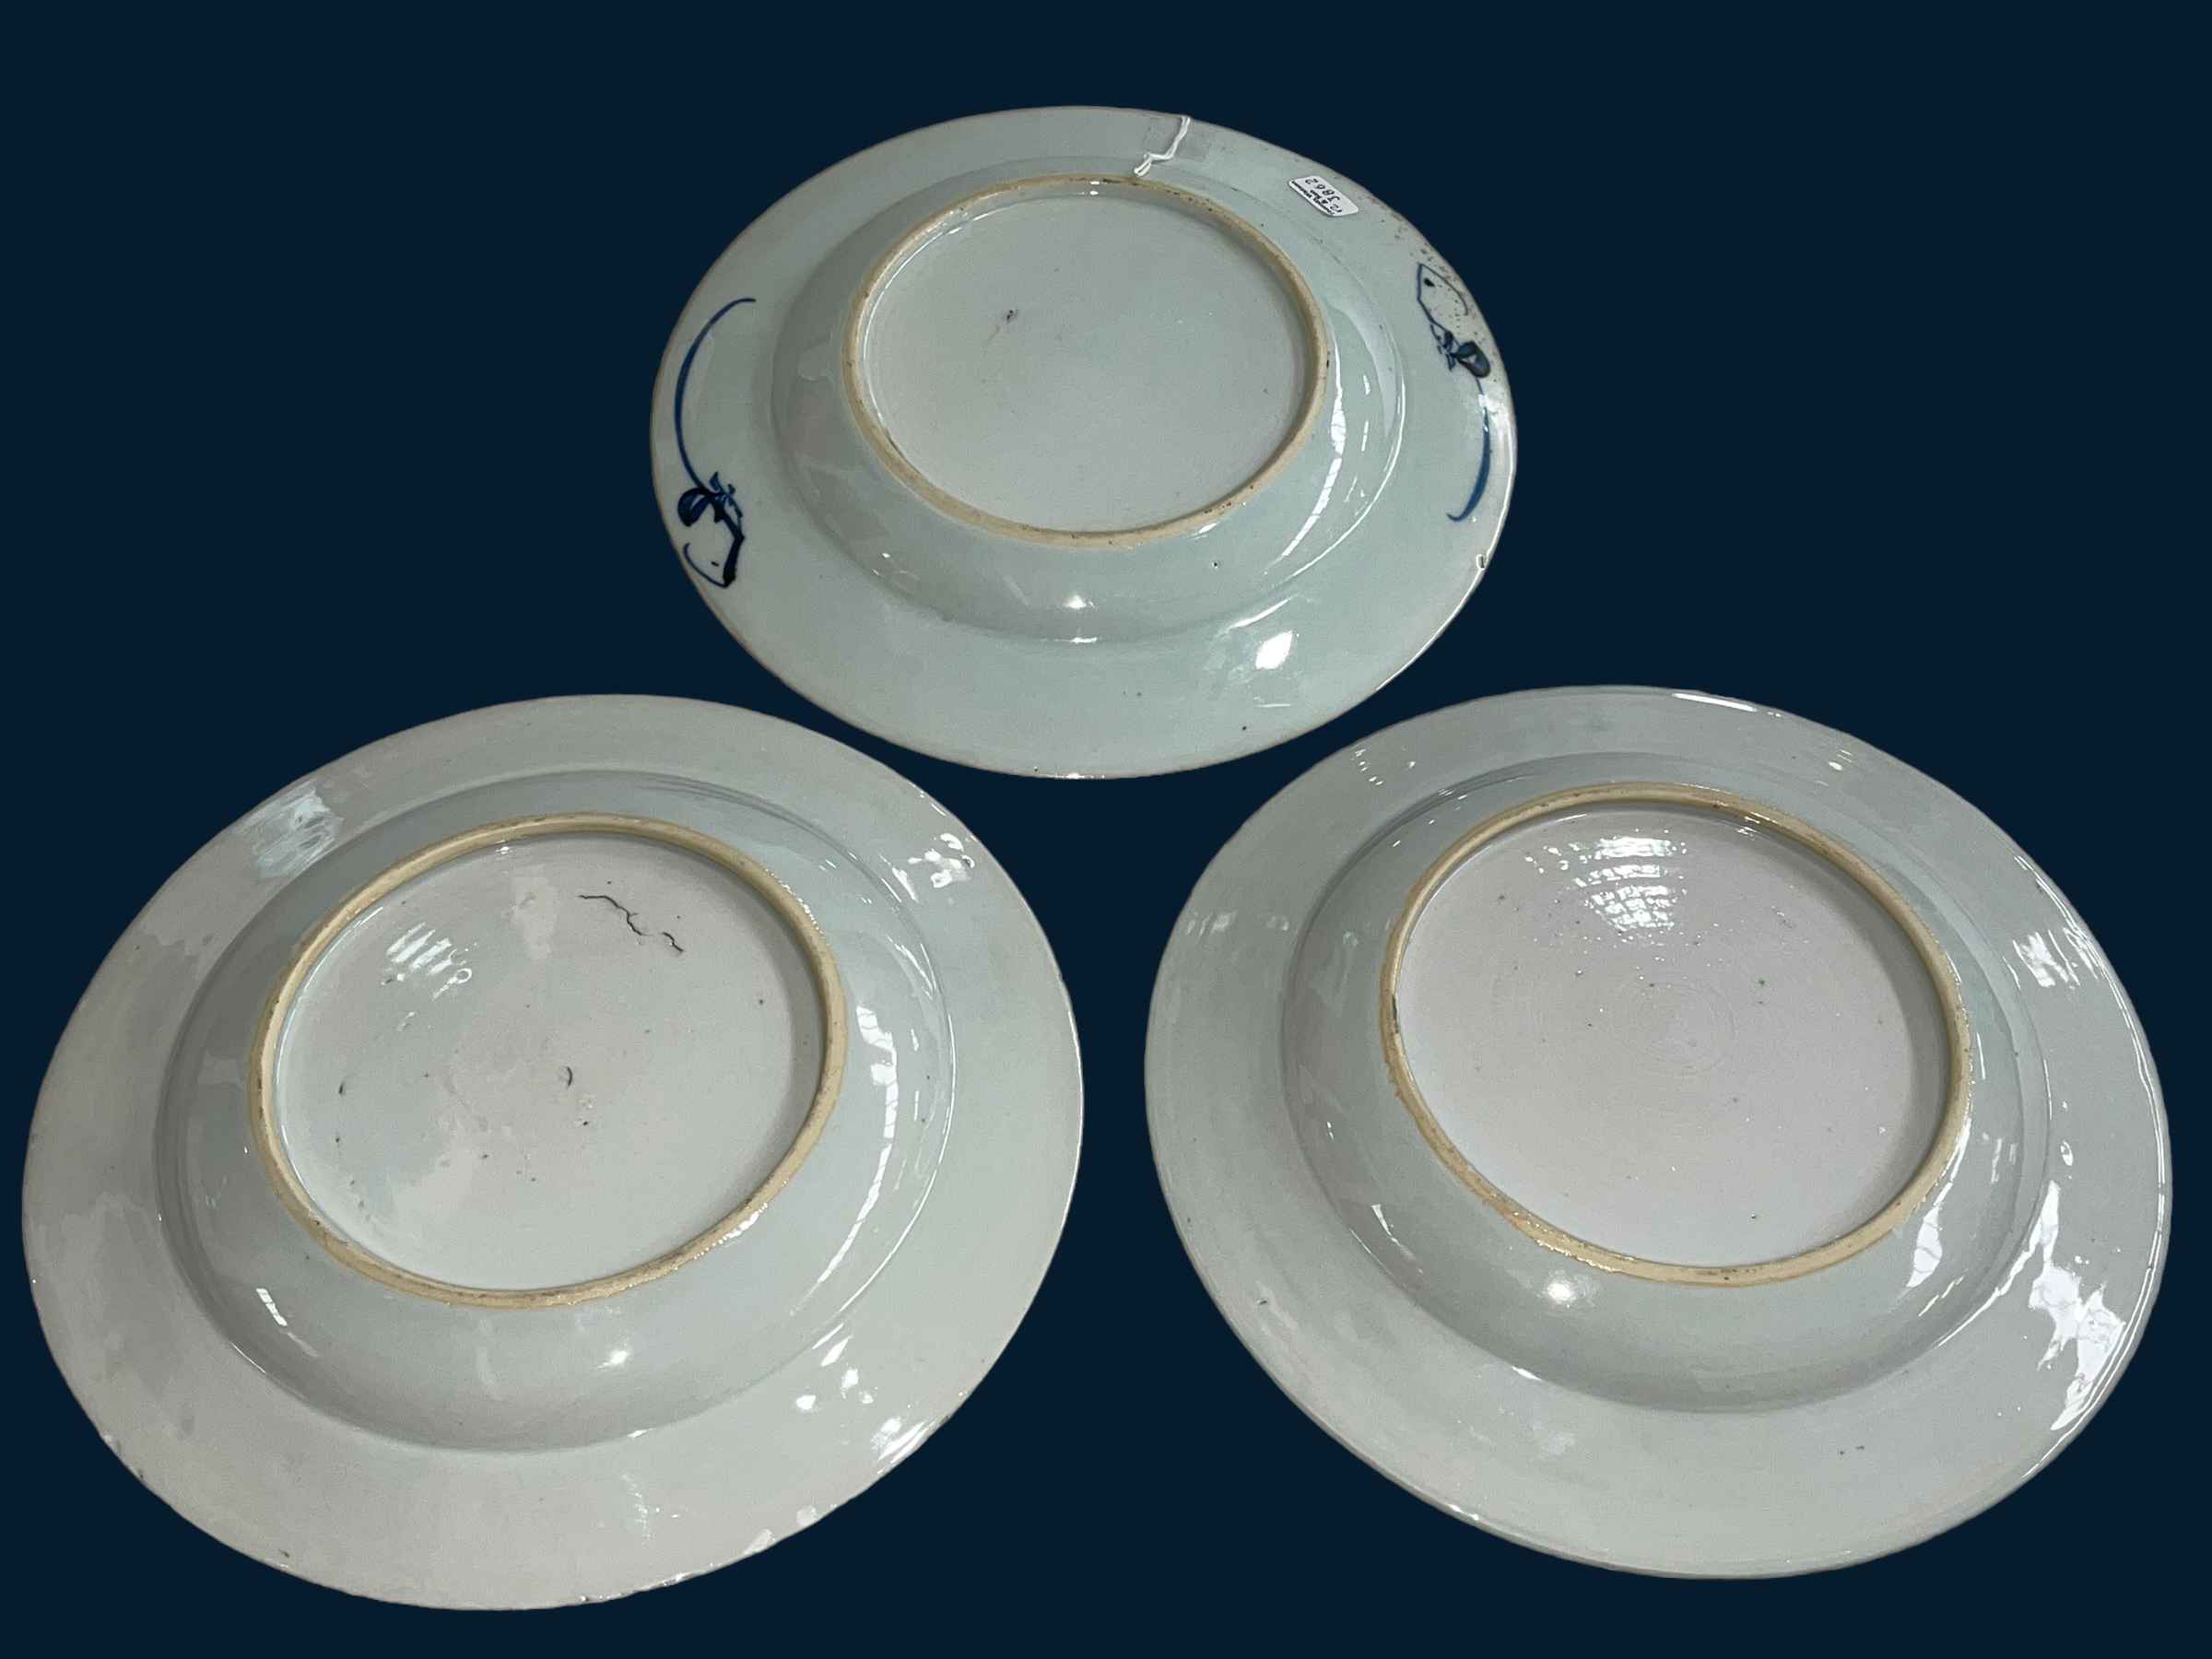 18th Century Imari plate and pair of 18th Century Chinese plates. - Image 2 of 2